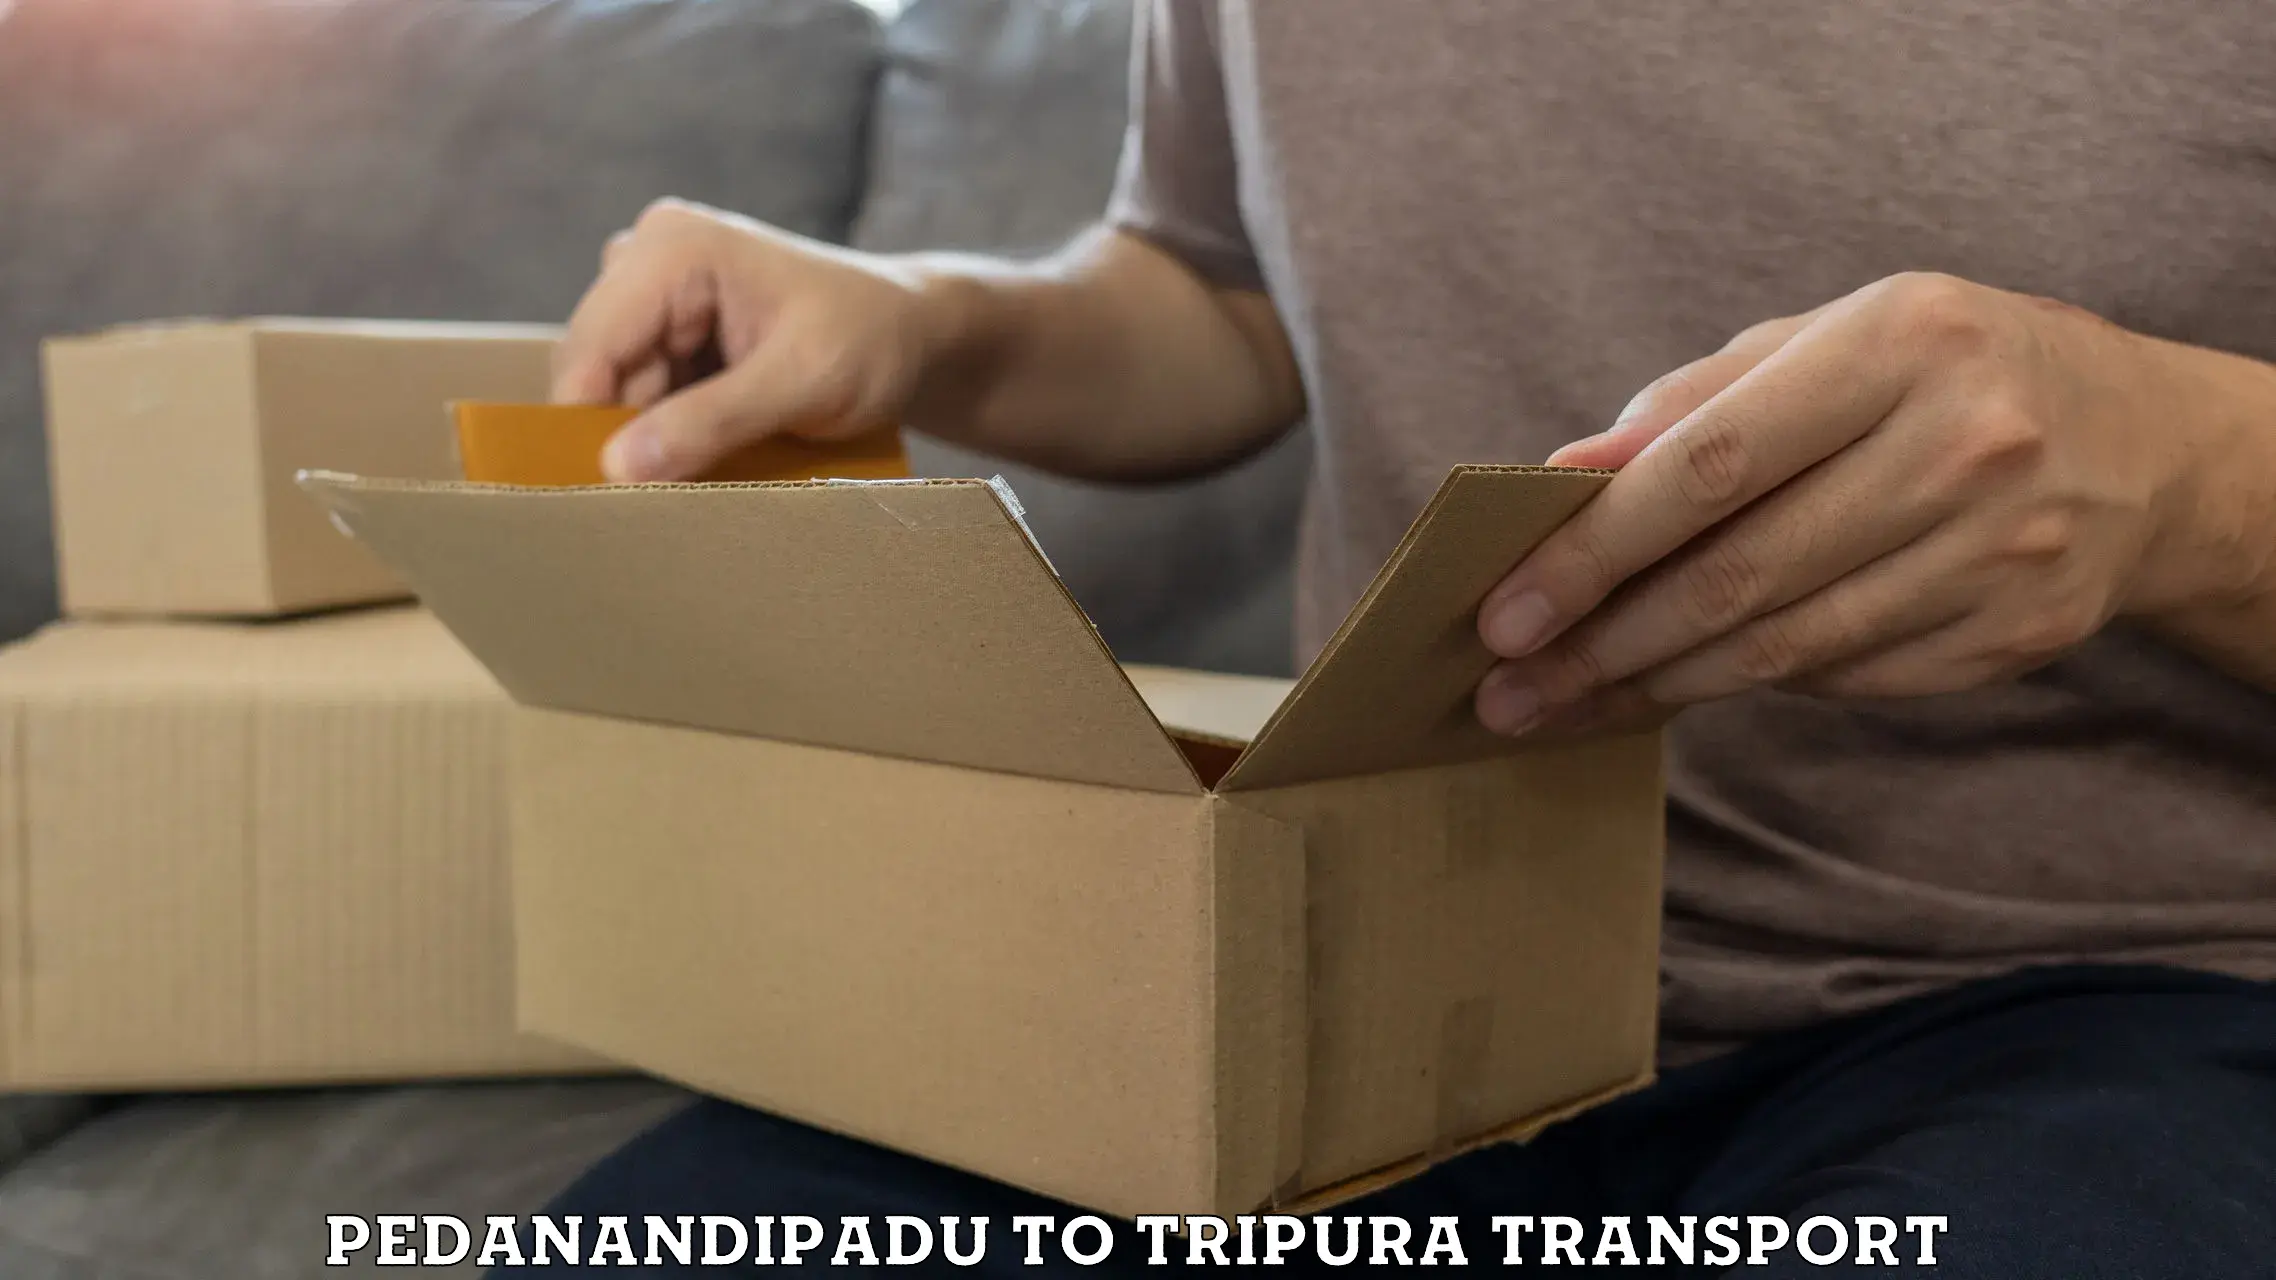 Transport in sharing Pedanandipadu to South Tripura